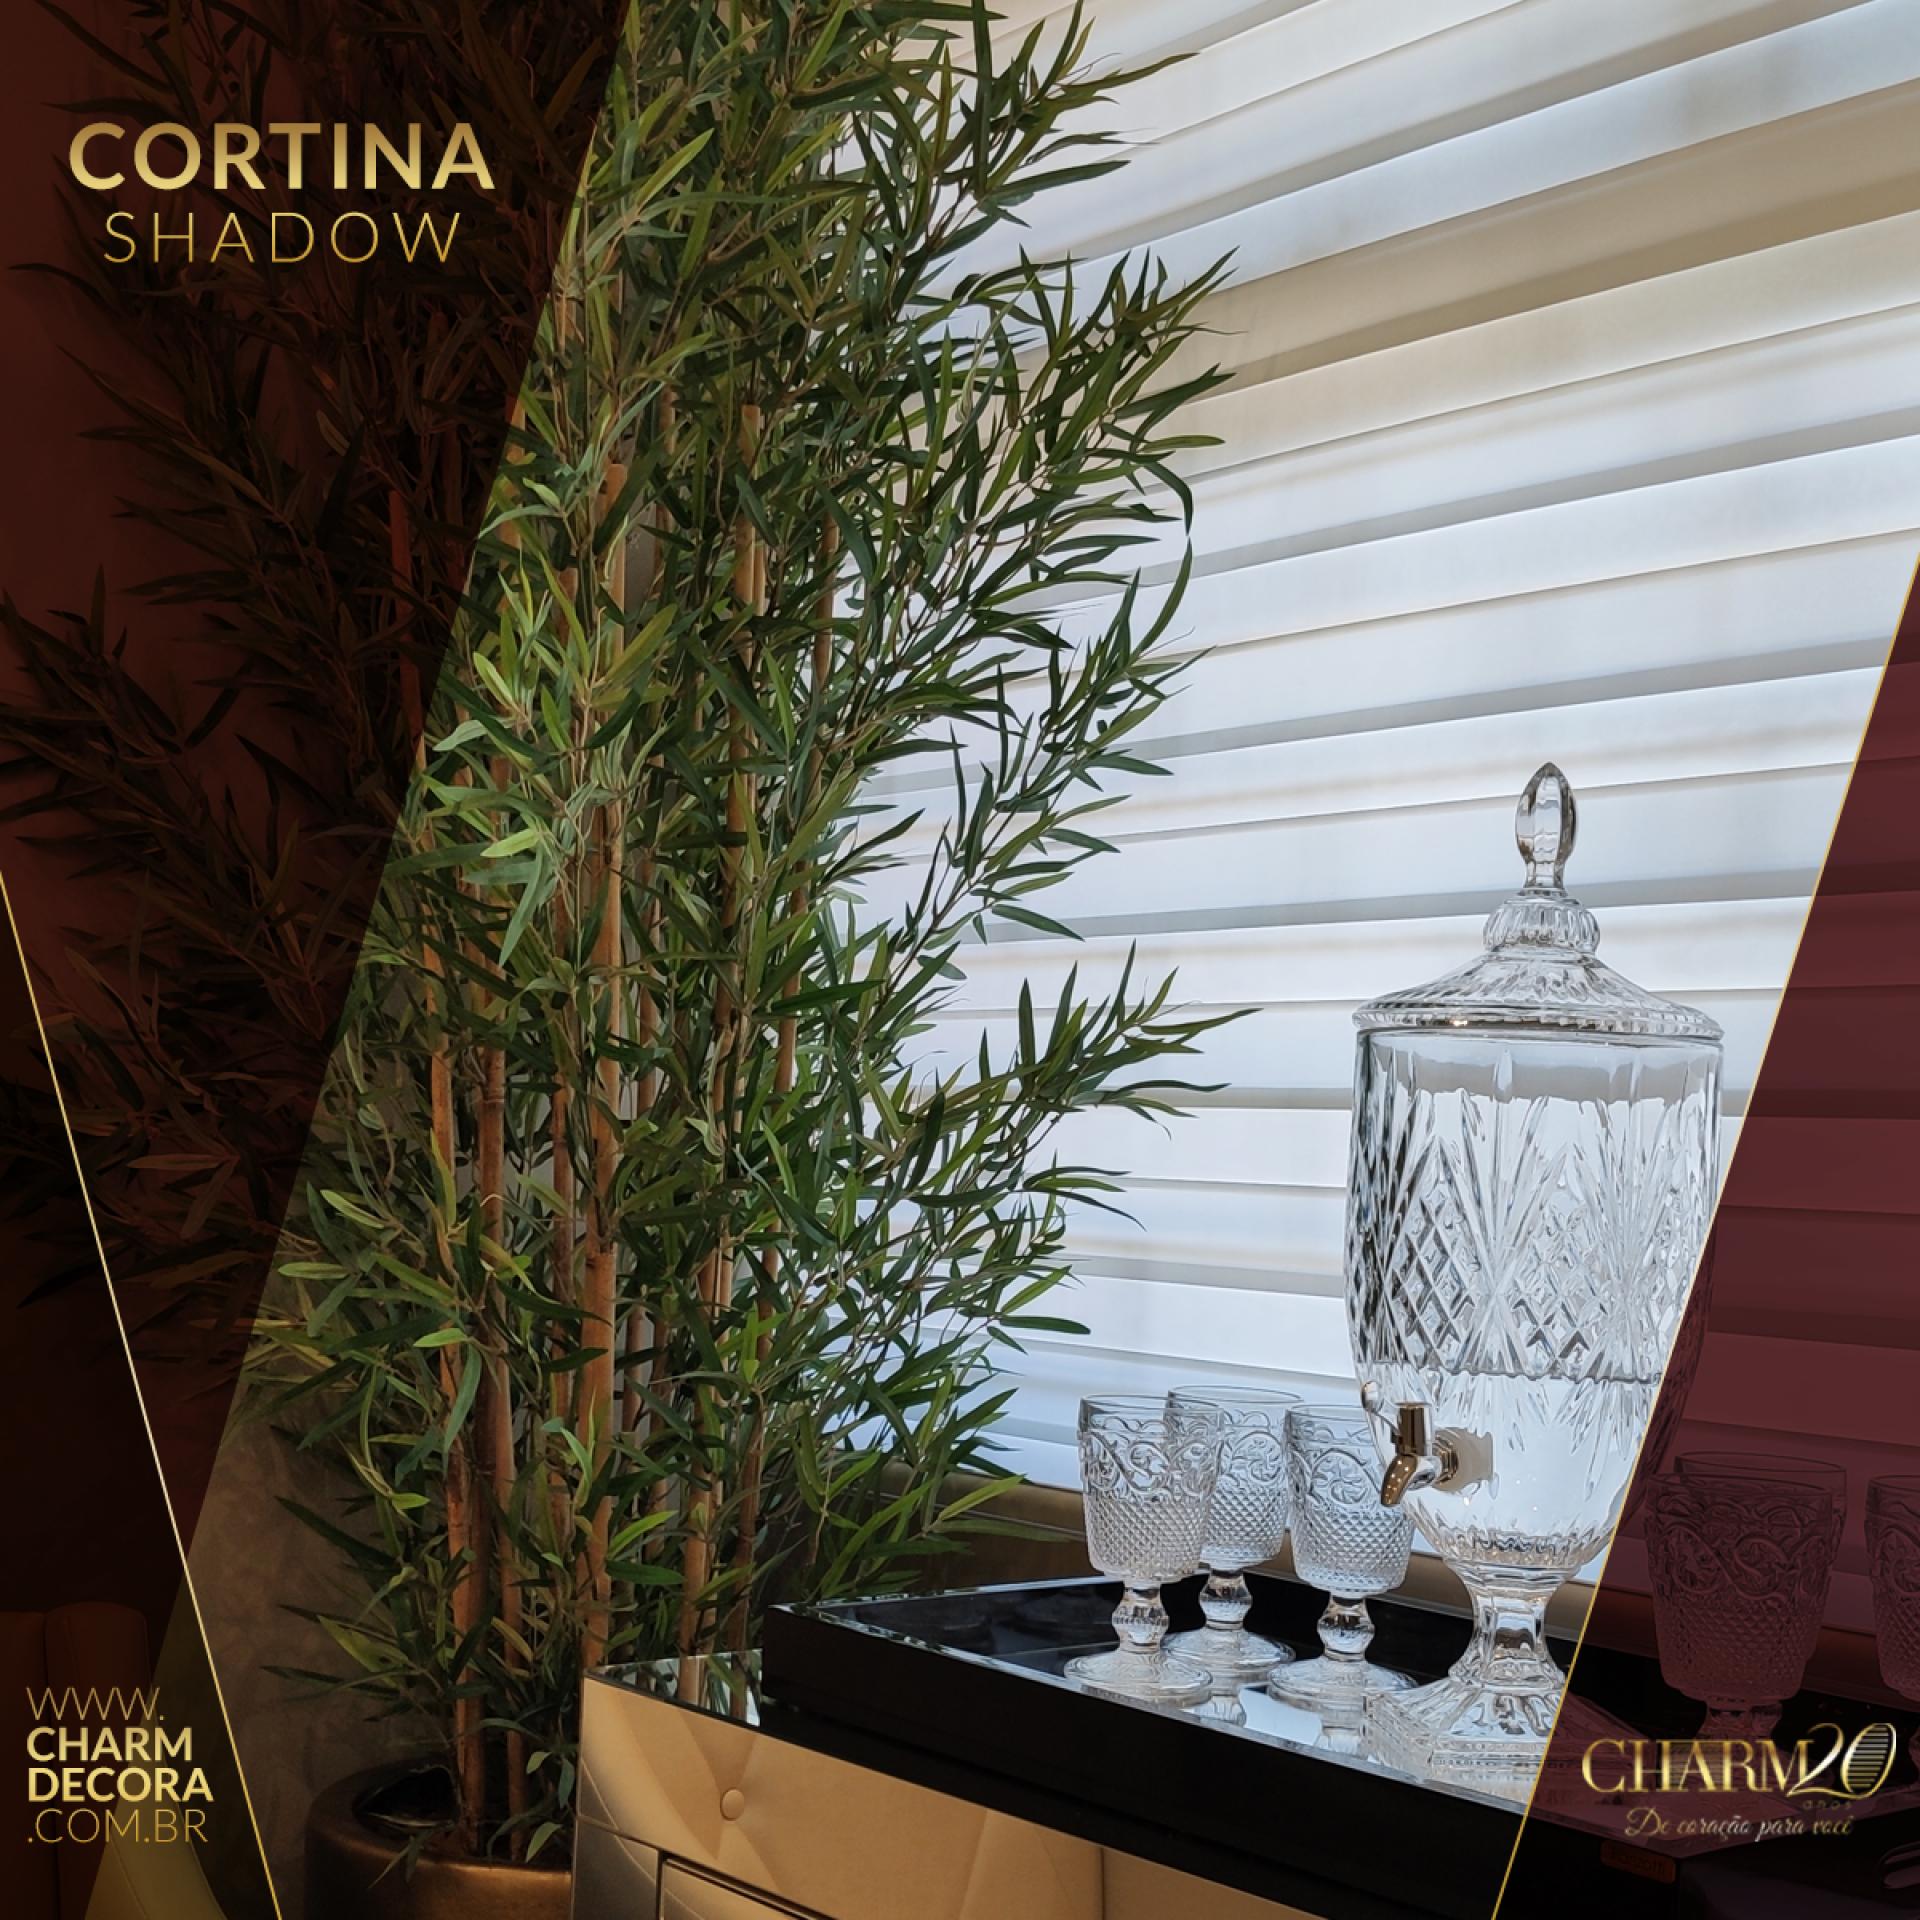 Cortina Shadow